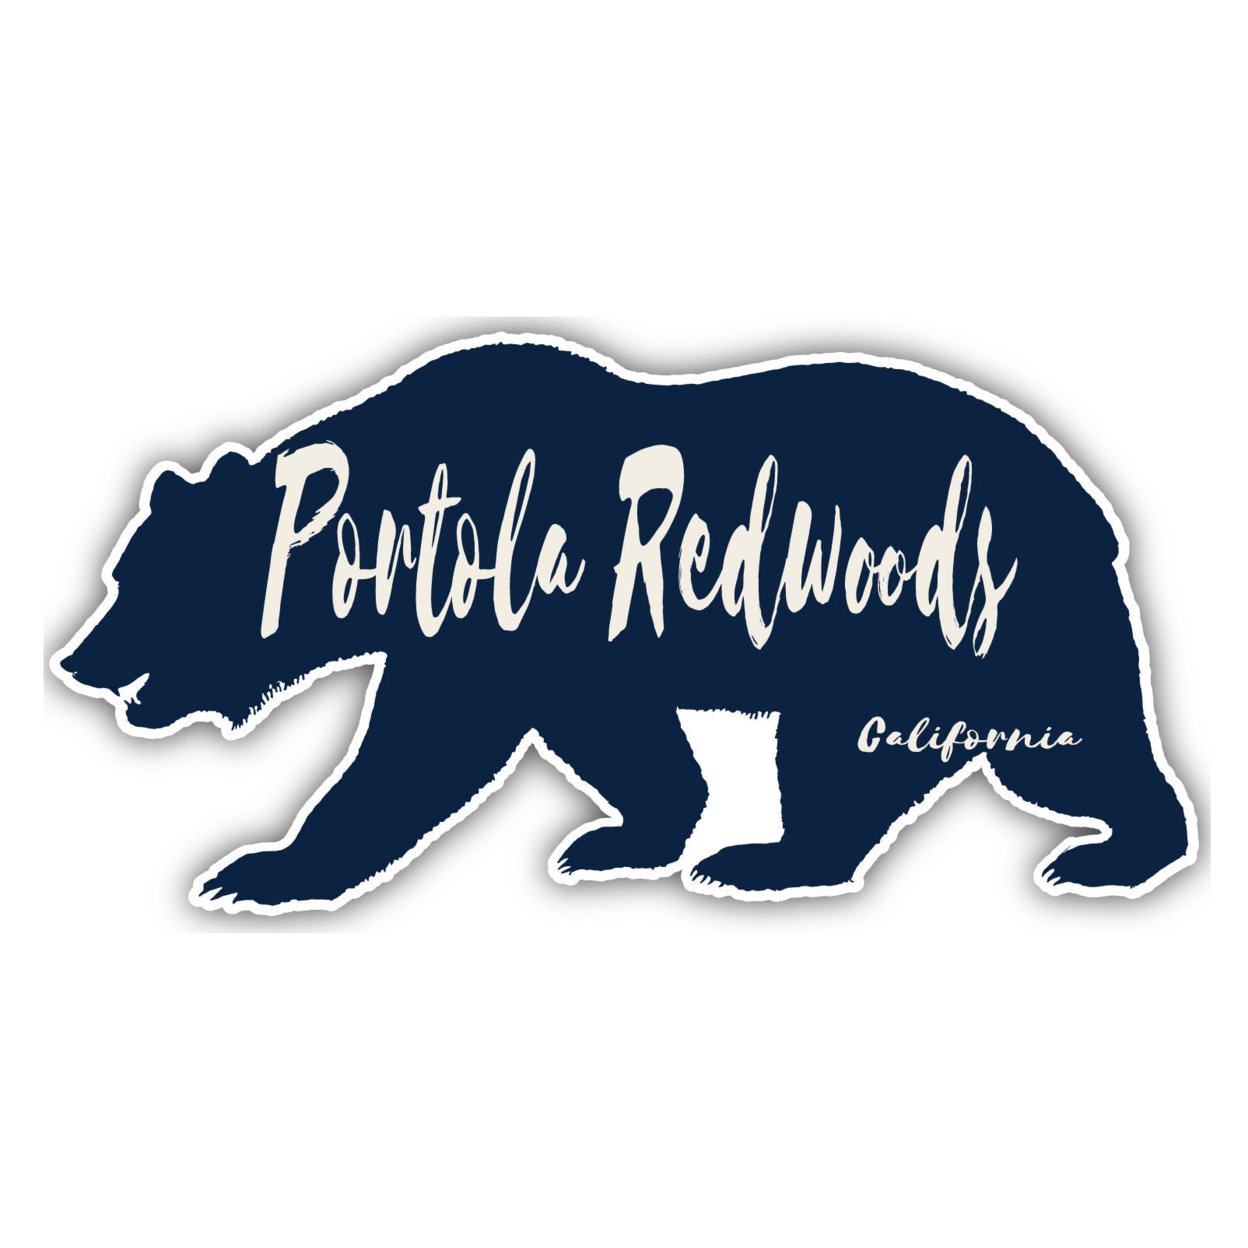 Portola Redwoods California Souvenir Decorative Stickers (Choose Theme And Size) - Single Unit, 2-Inch, Bear